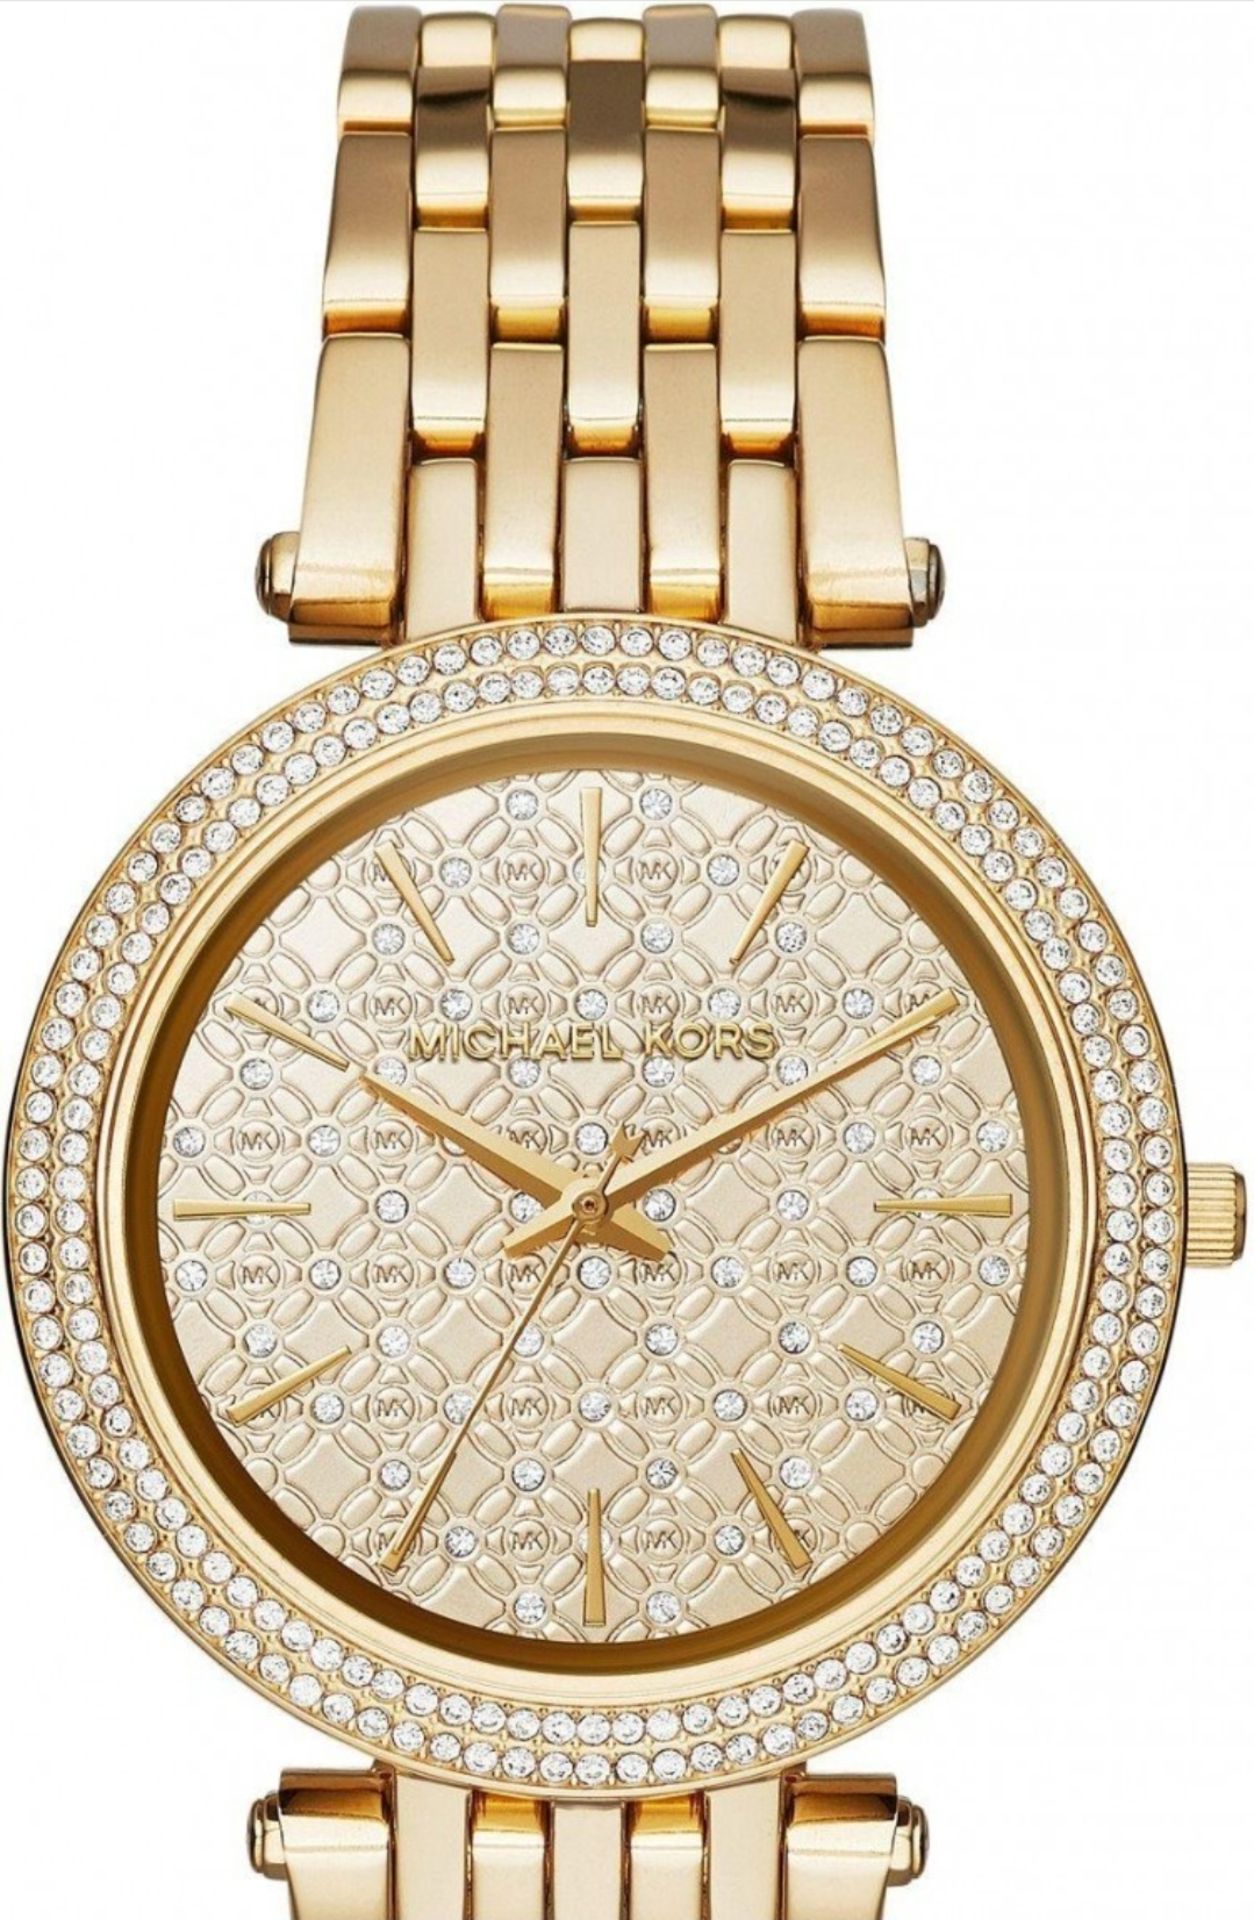 Michael Kors MK3398 Darci Gold Tone Stainless Steel Ladies Watch - Image 3 of 7